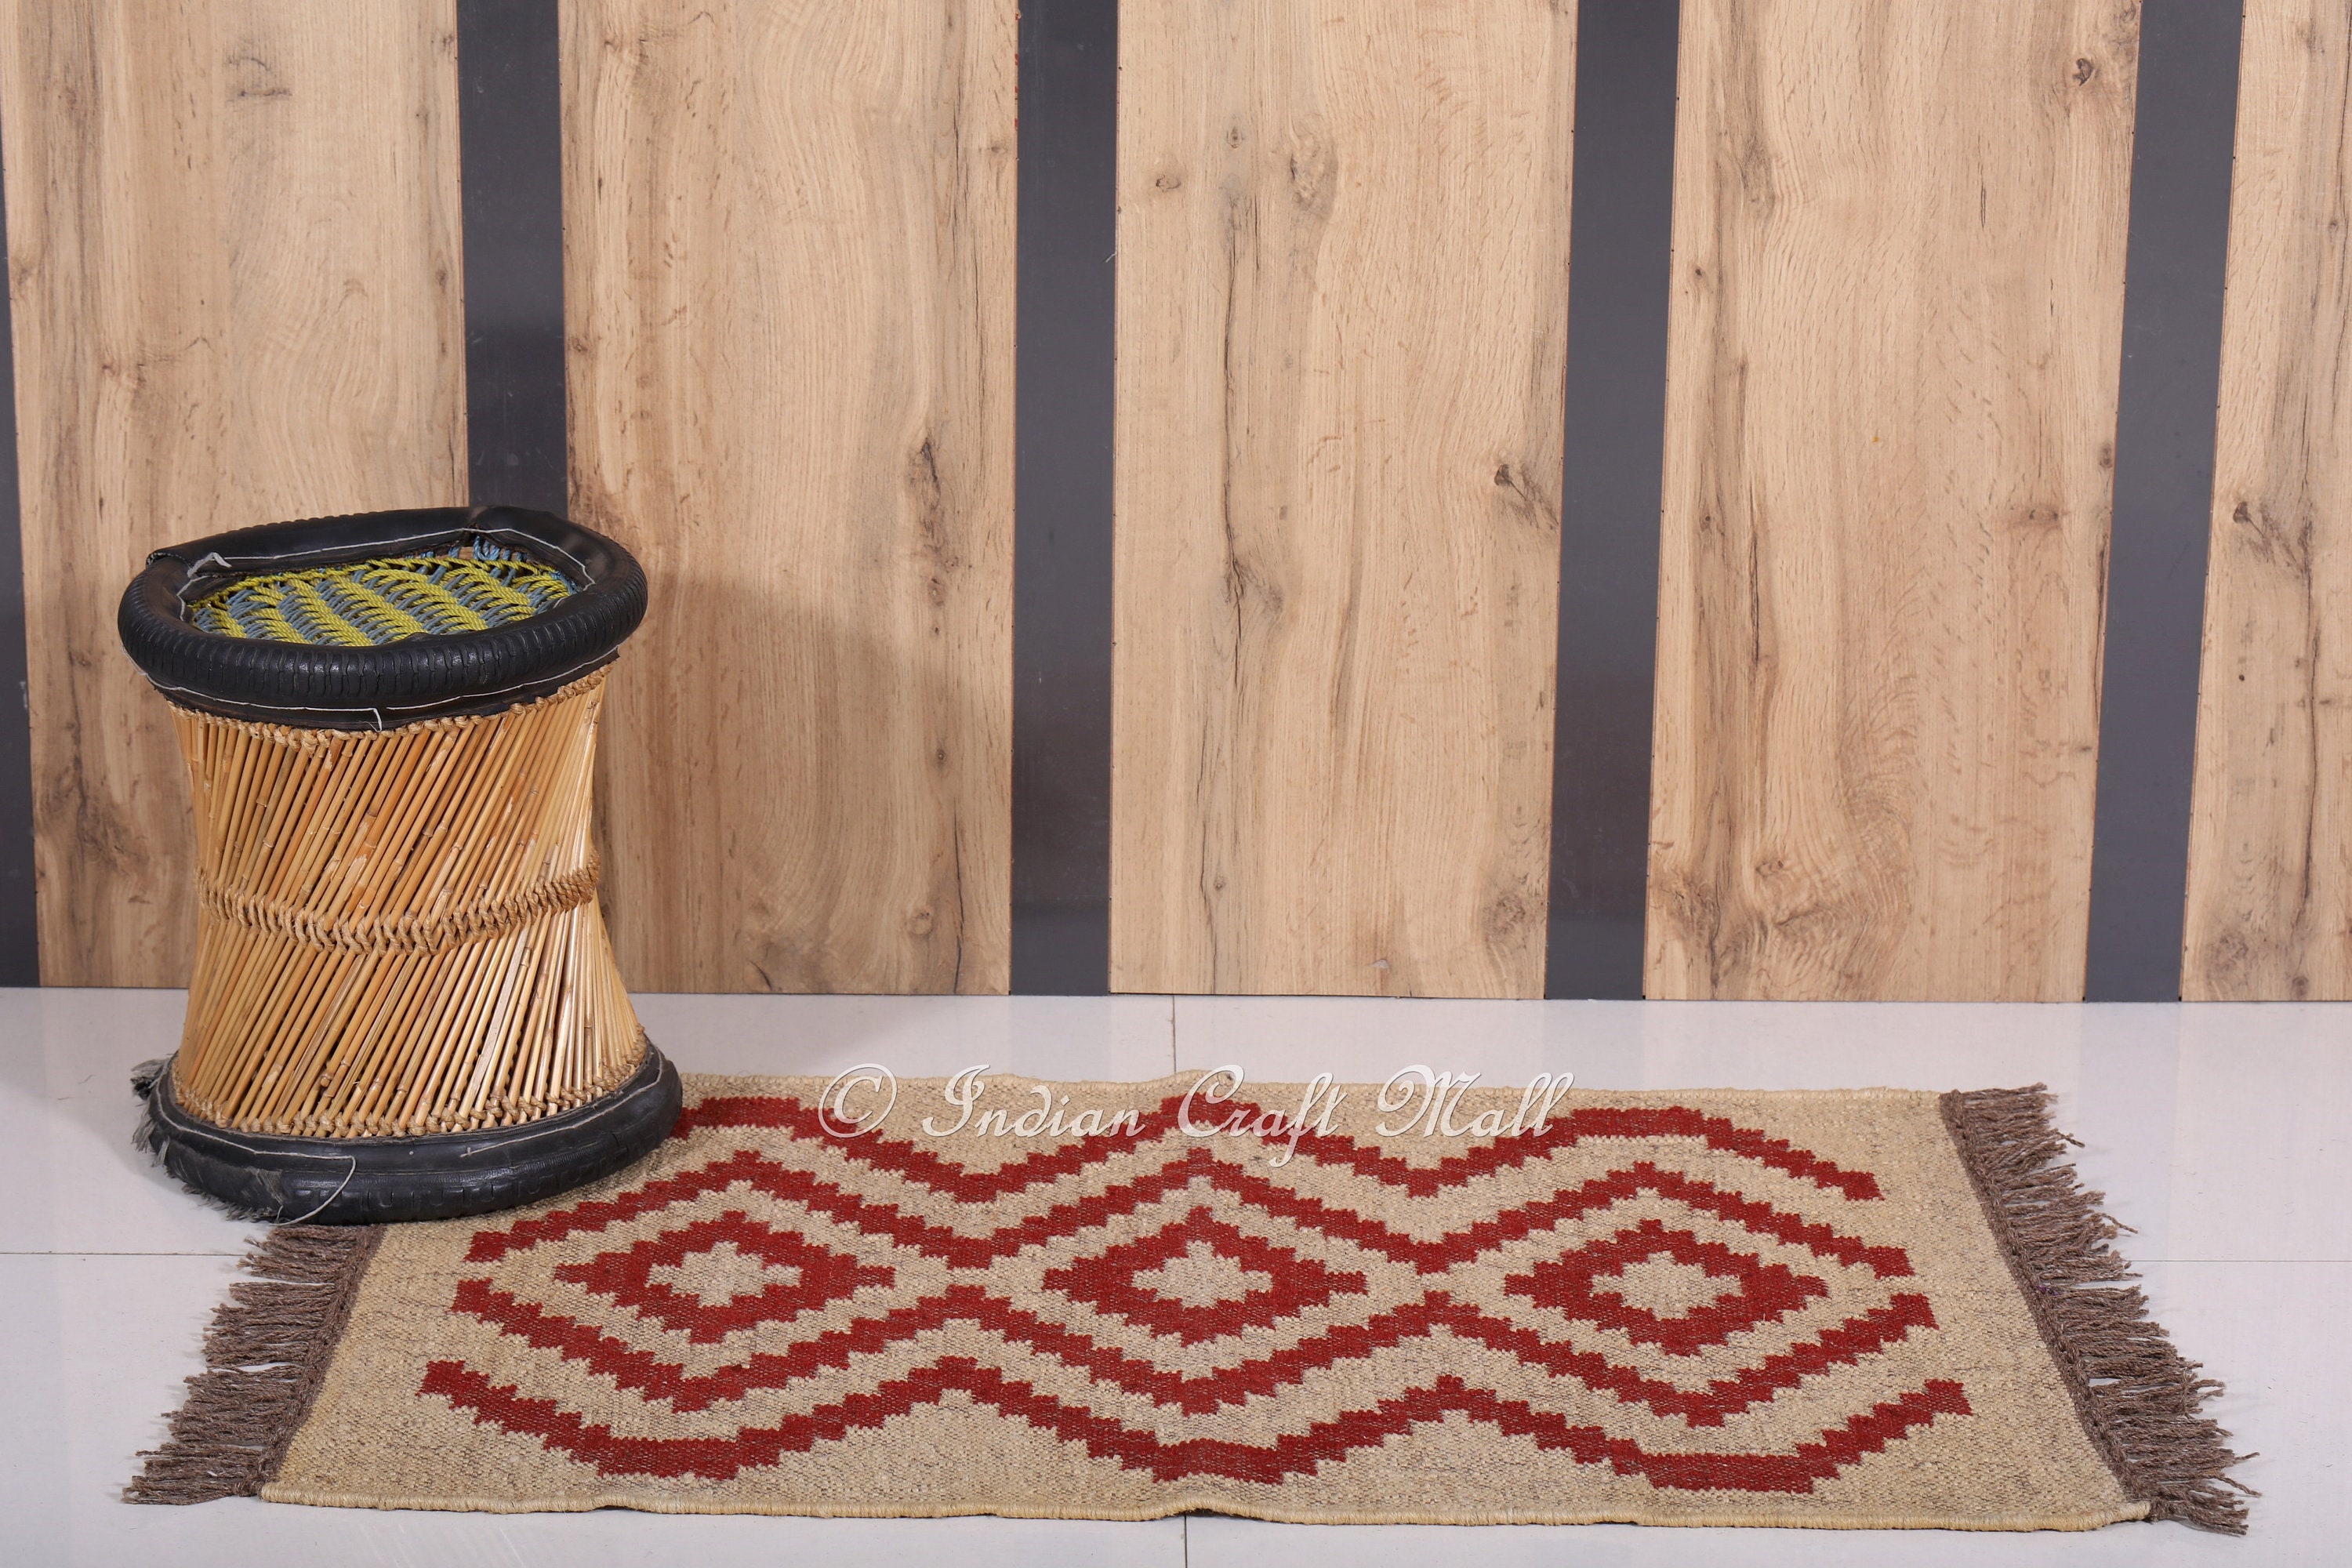 Details about   Kilim Runner Wool Jute Indoor Area Rug Vintage Dhurrie Handknotted Carpet 2x3' 